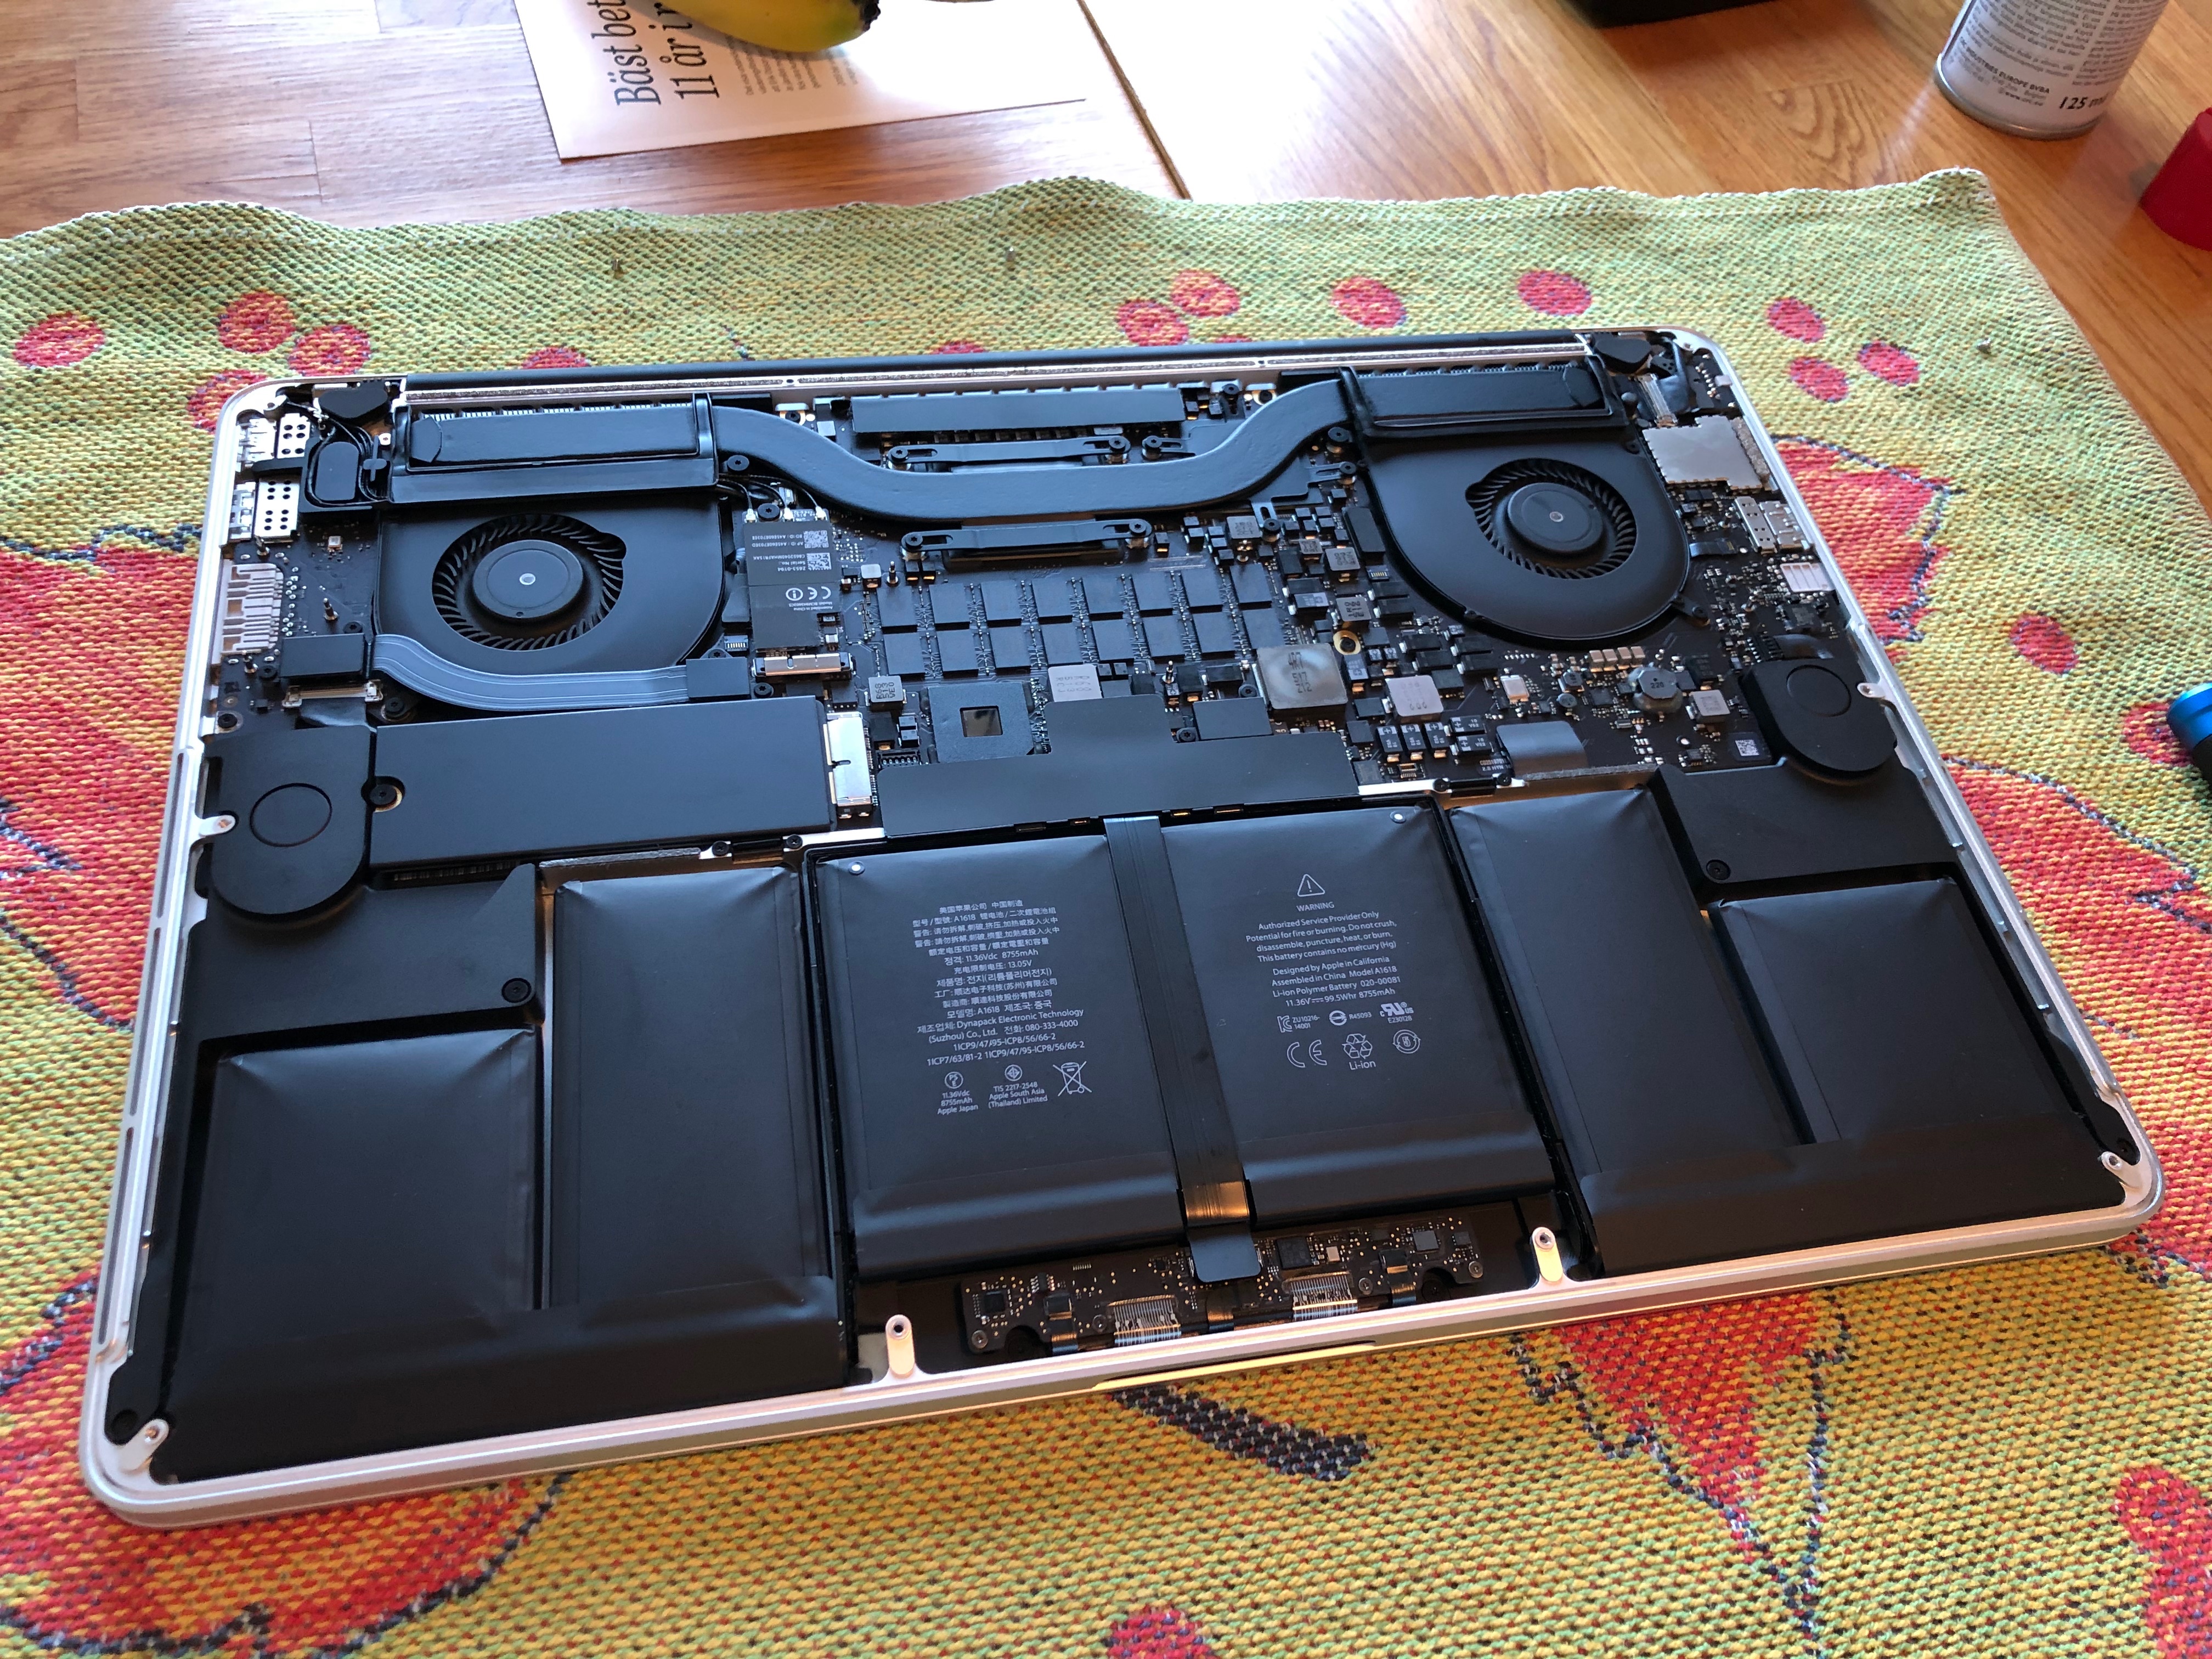 MacBook Pro 15” 2015 battery - Apple